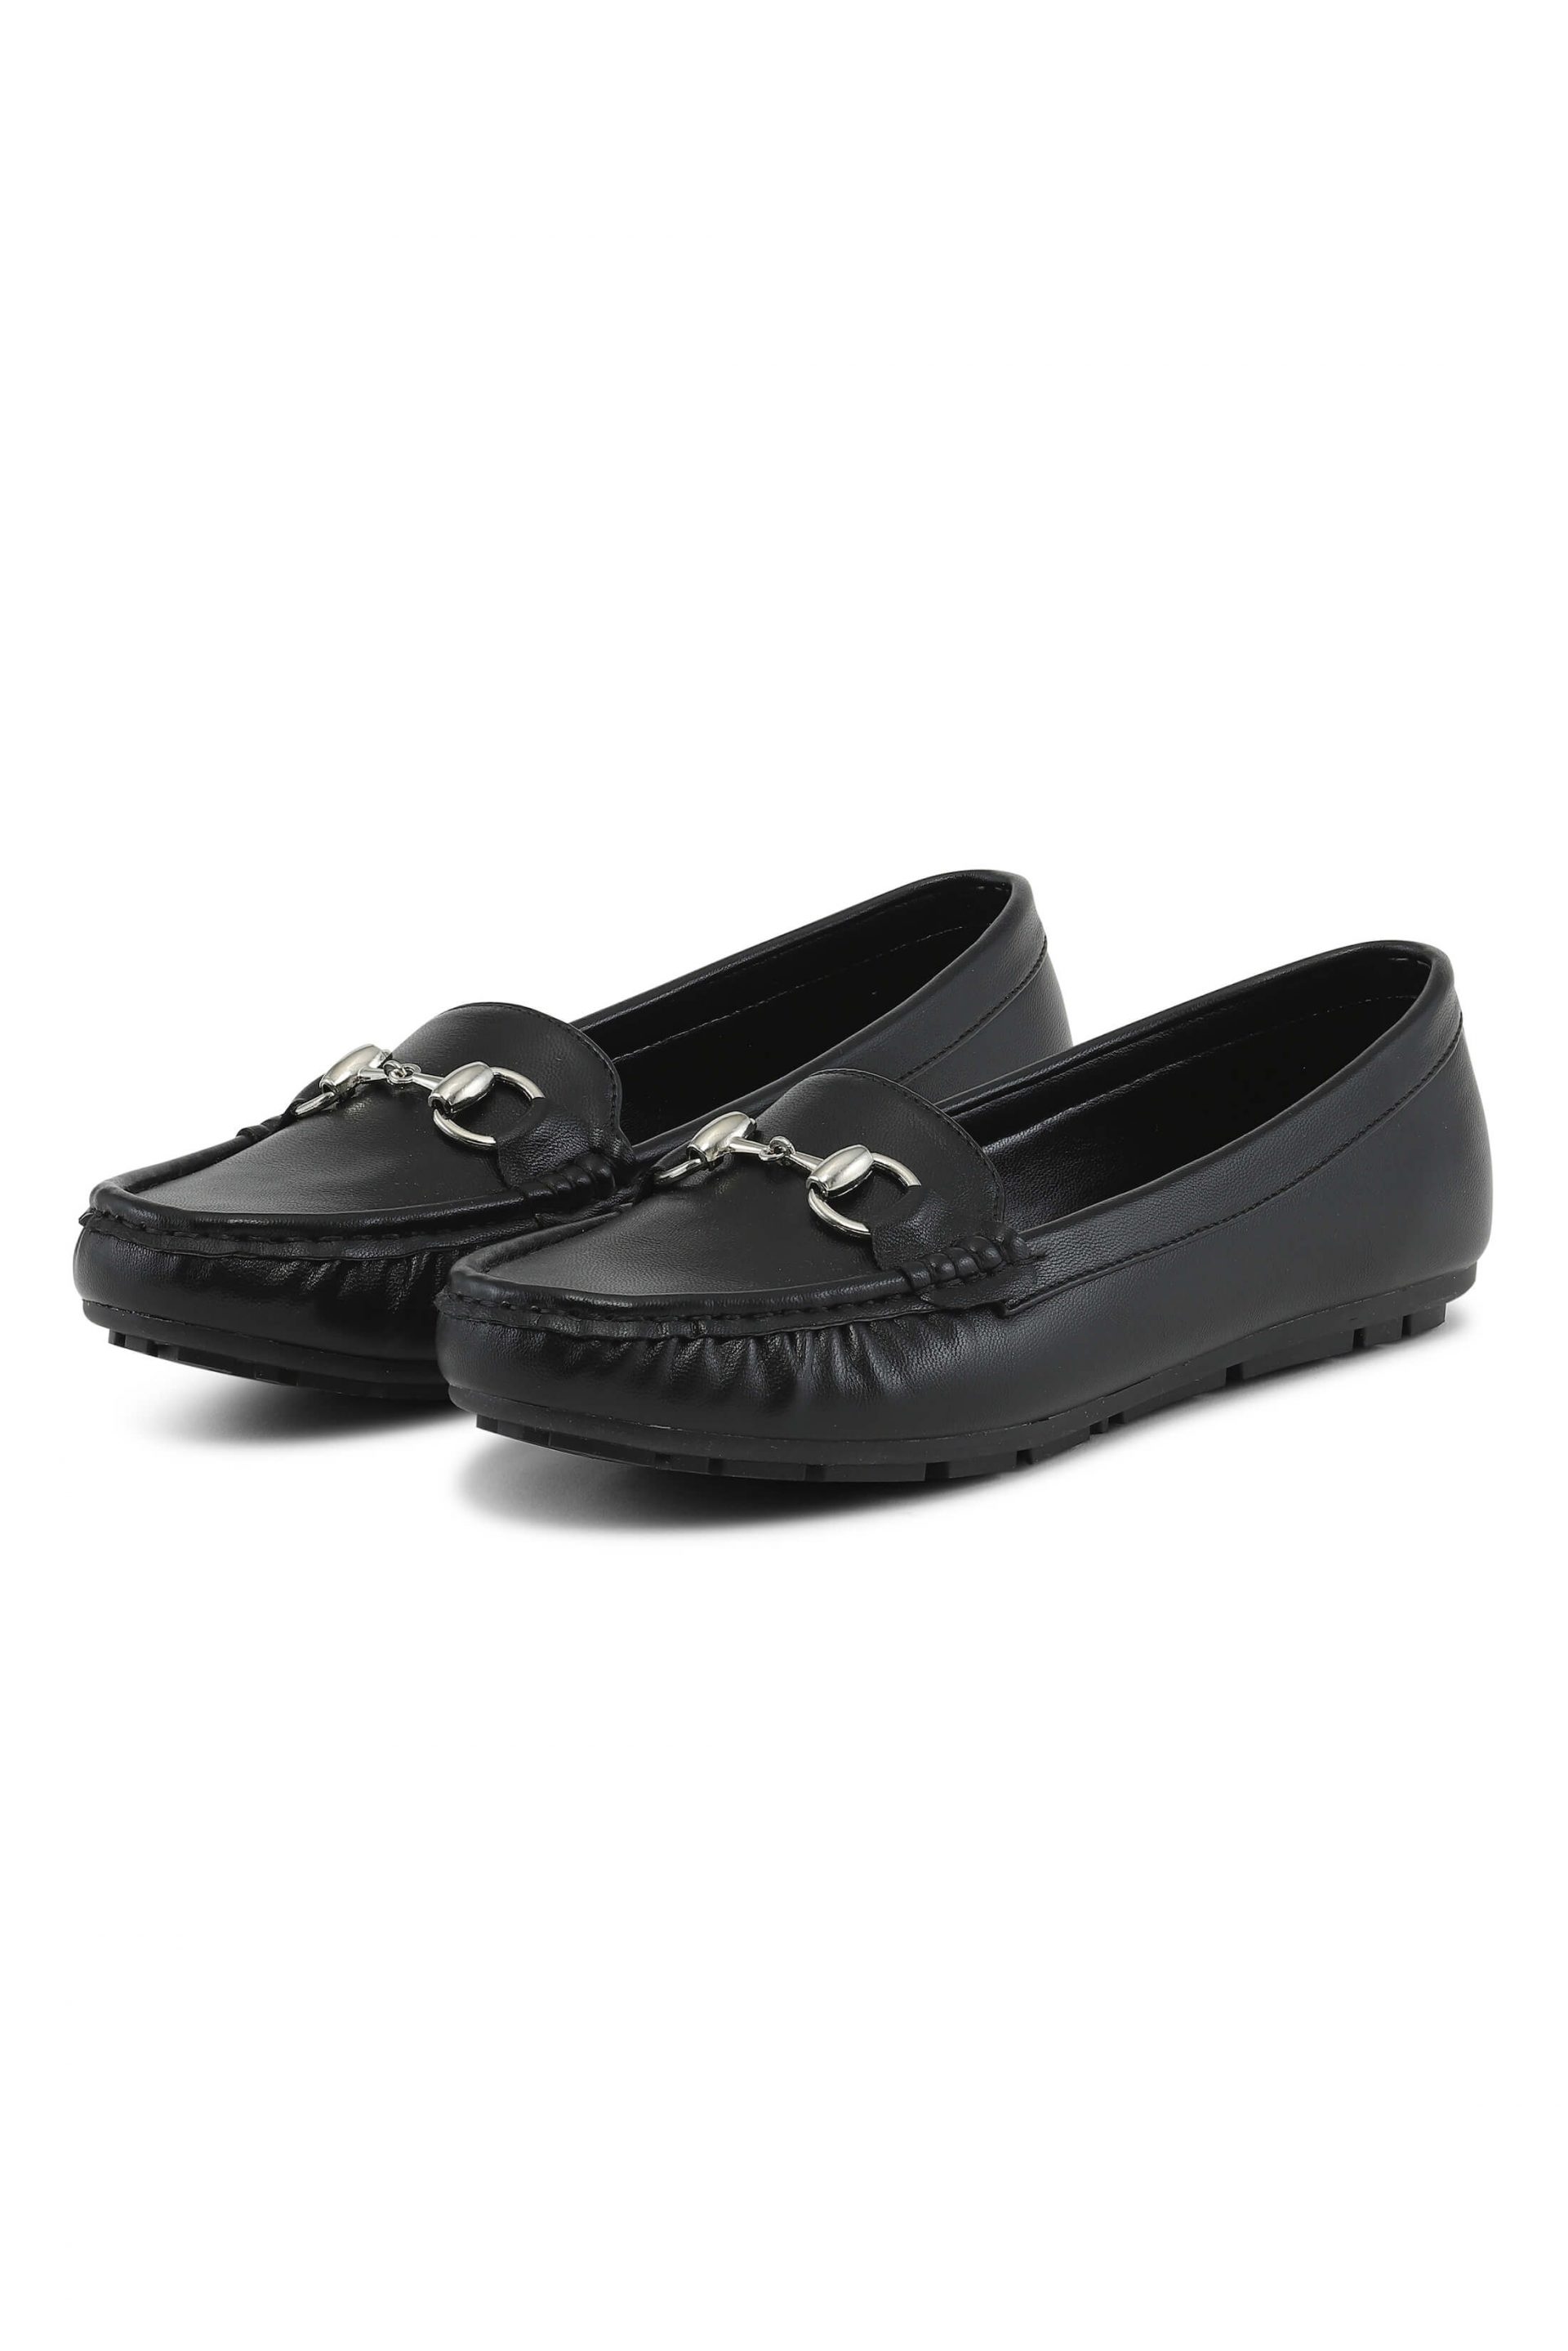 Soft black loafers